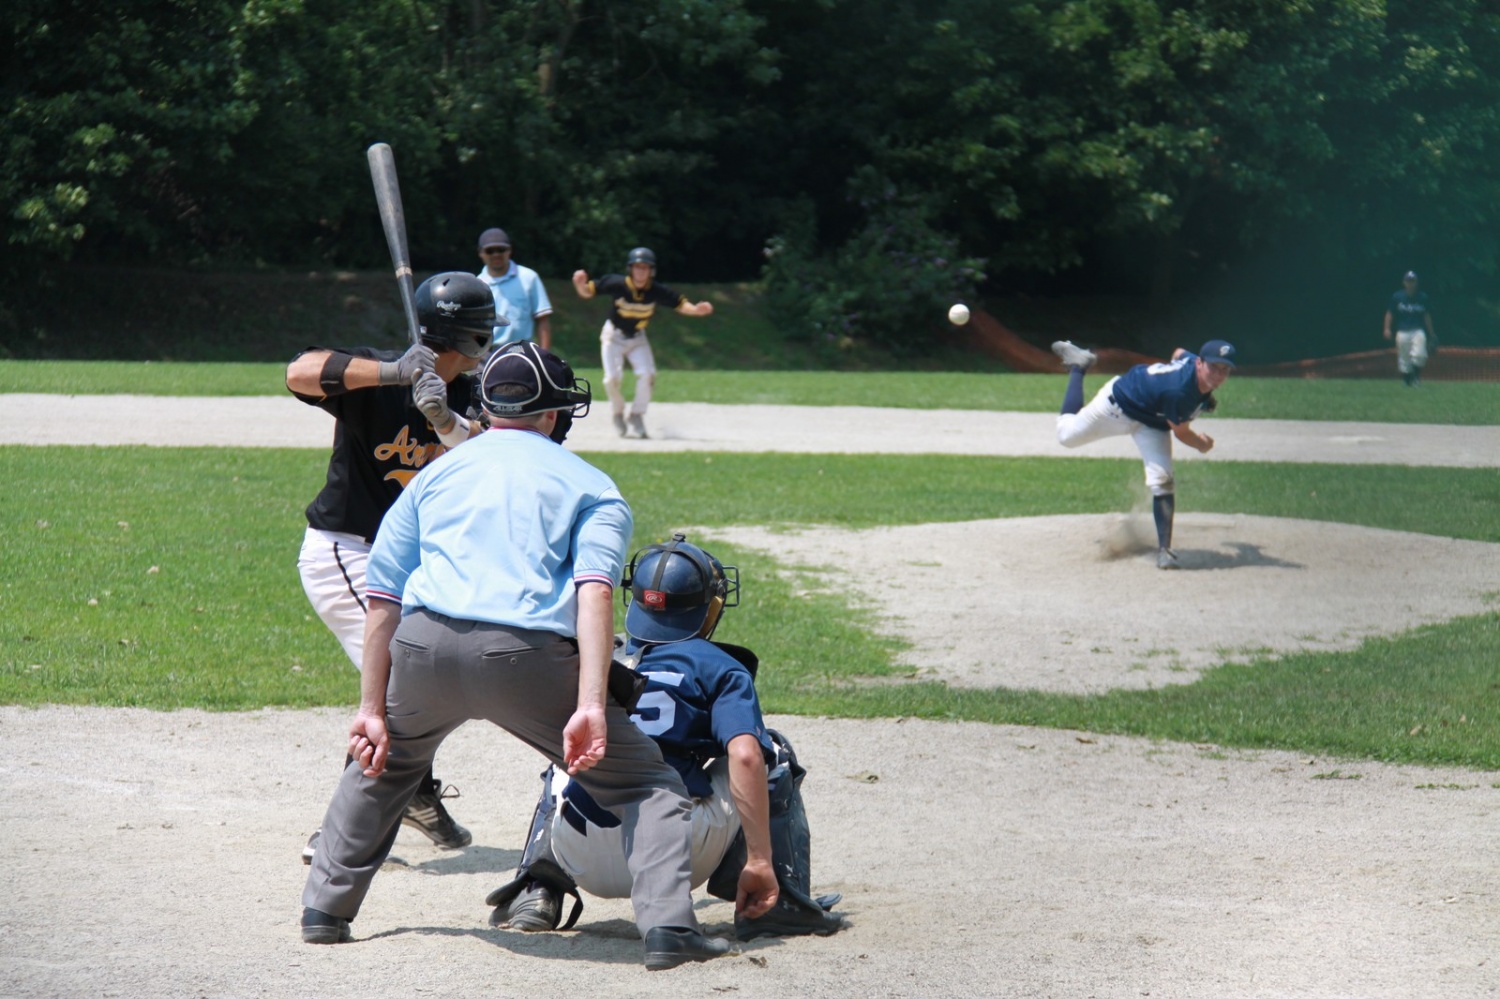 Baseball – softball Présentation du club des Grizzlys de Grenoble